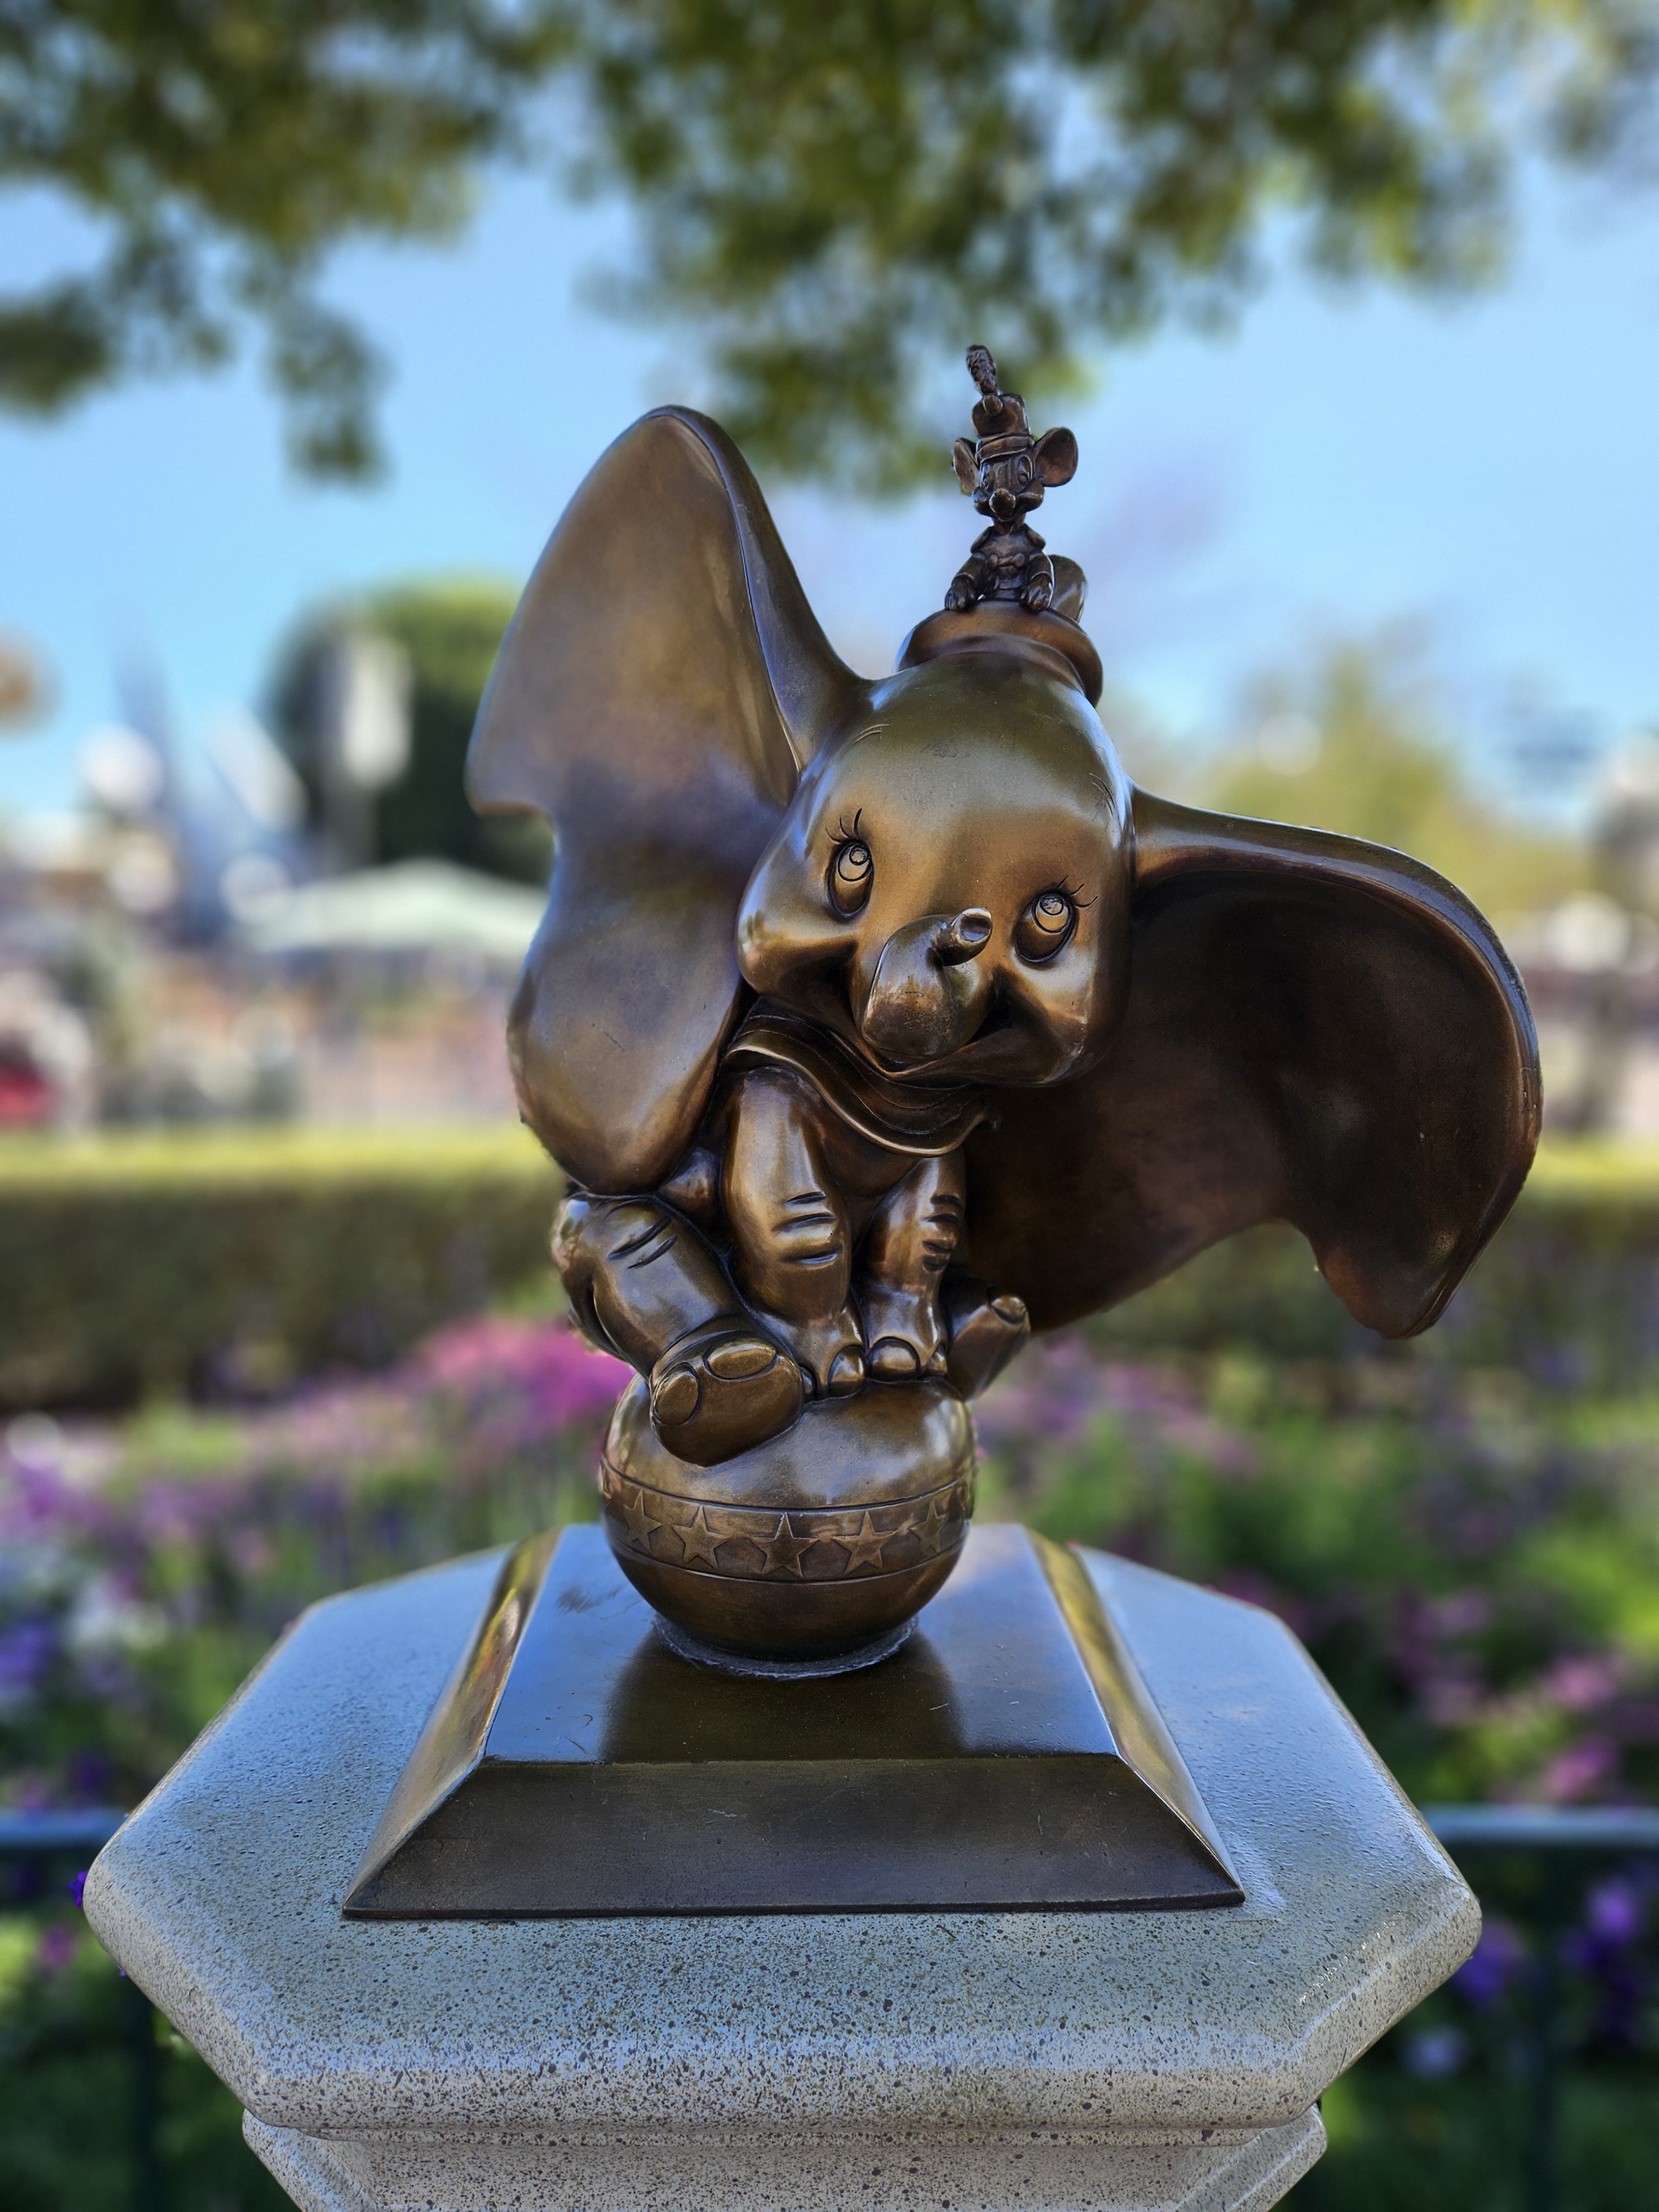 Dumbo statue at Disneyland portrait